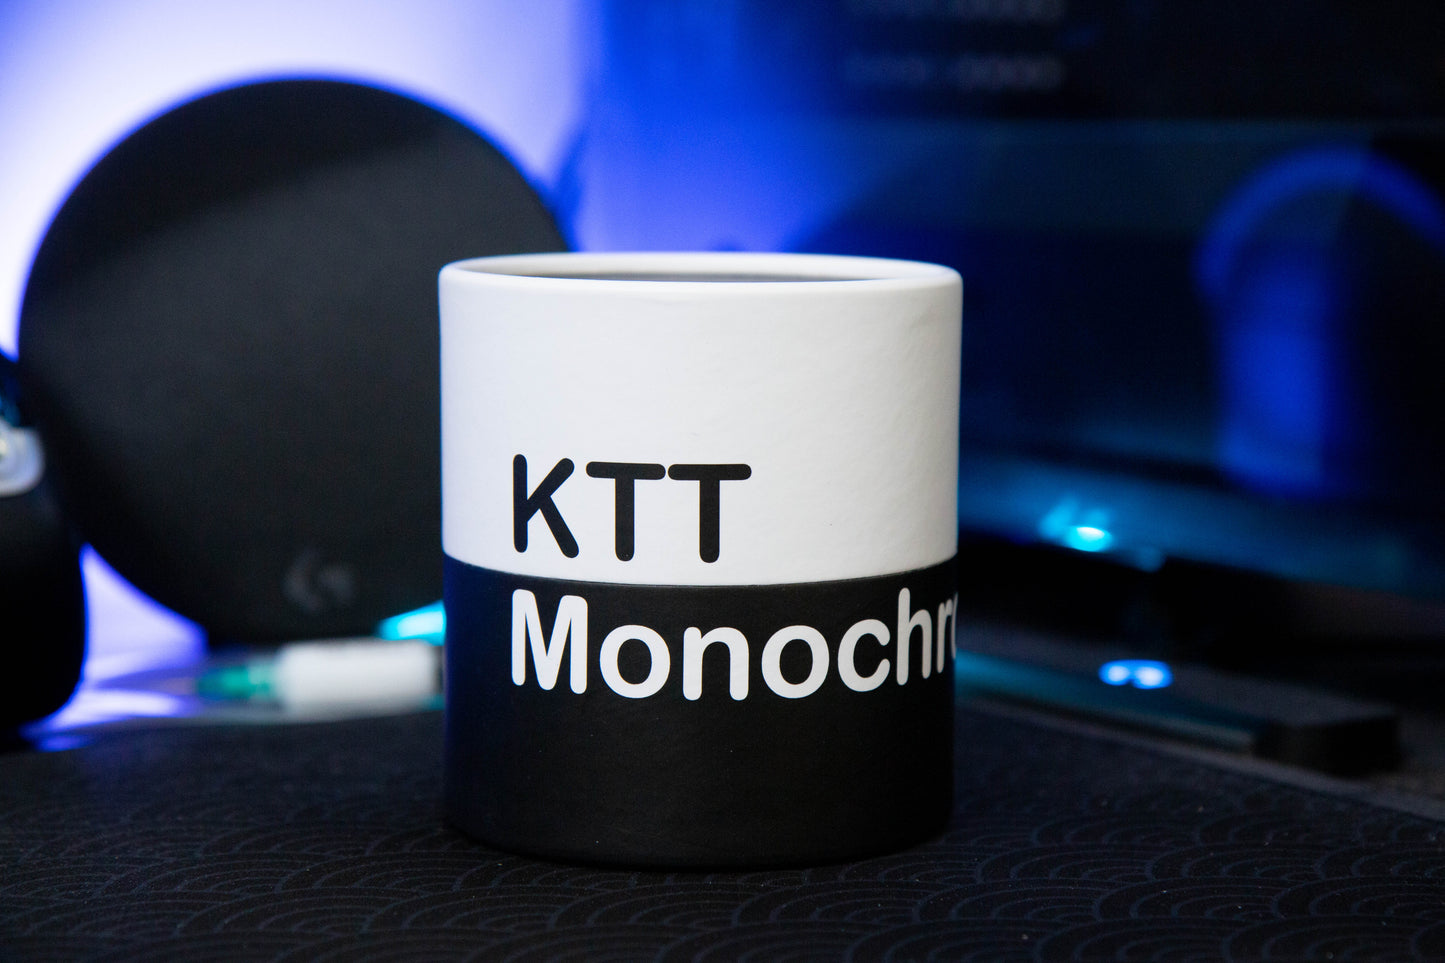 KTT Monochrome - Chalk